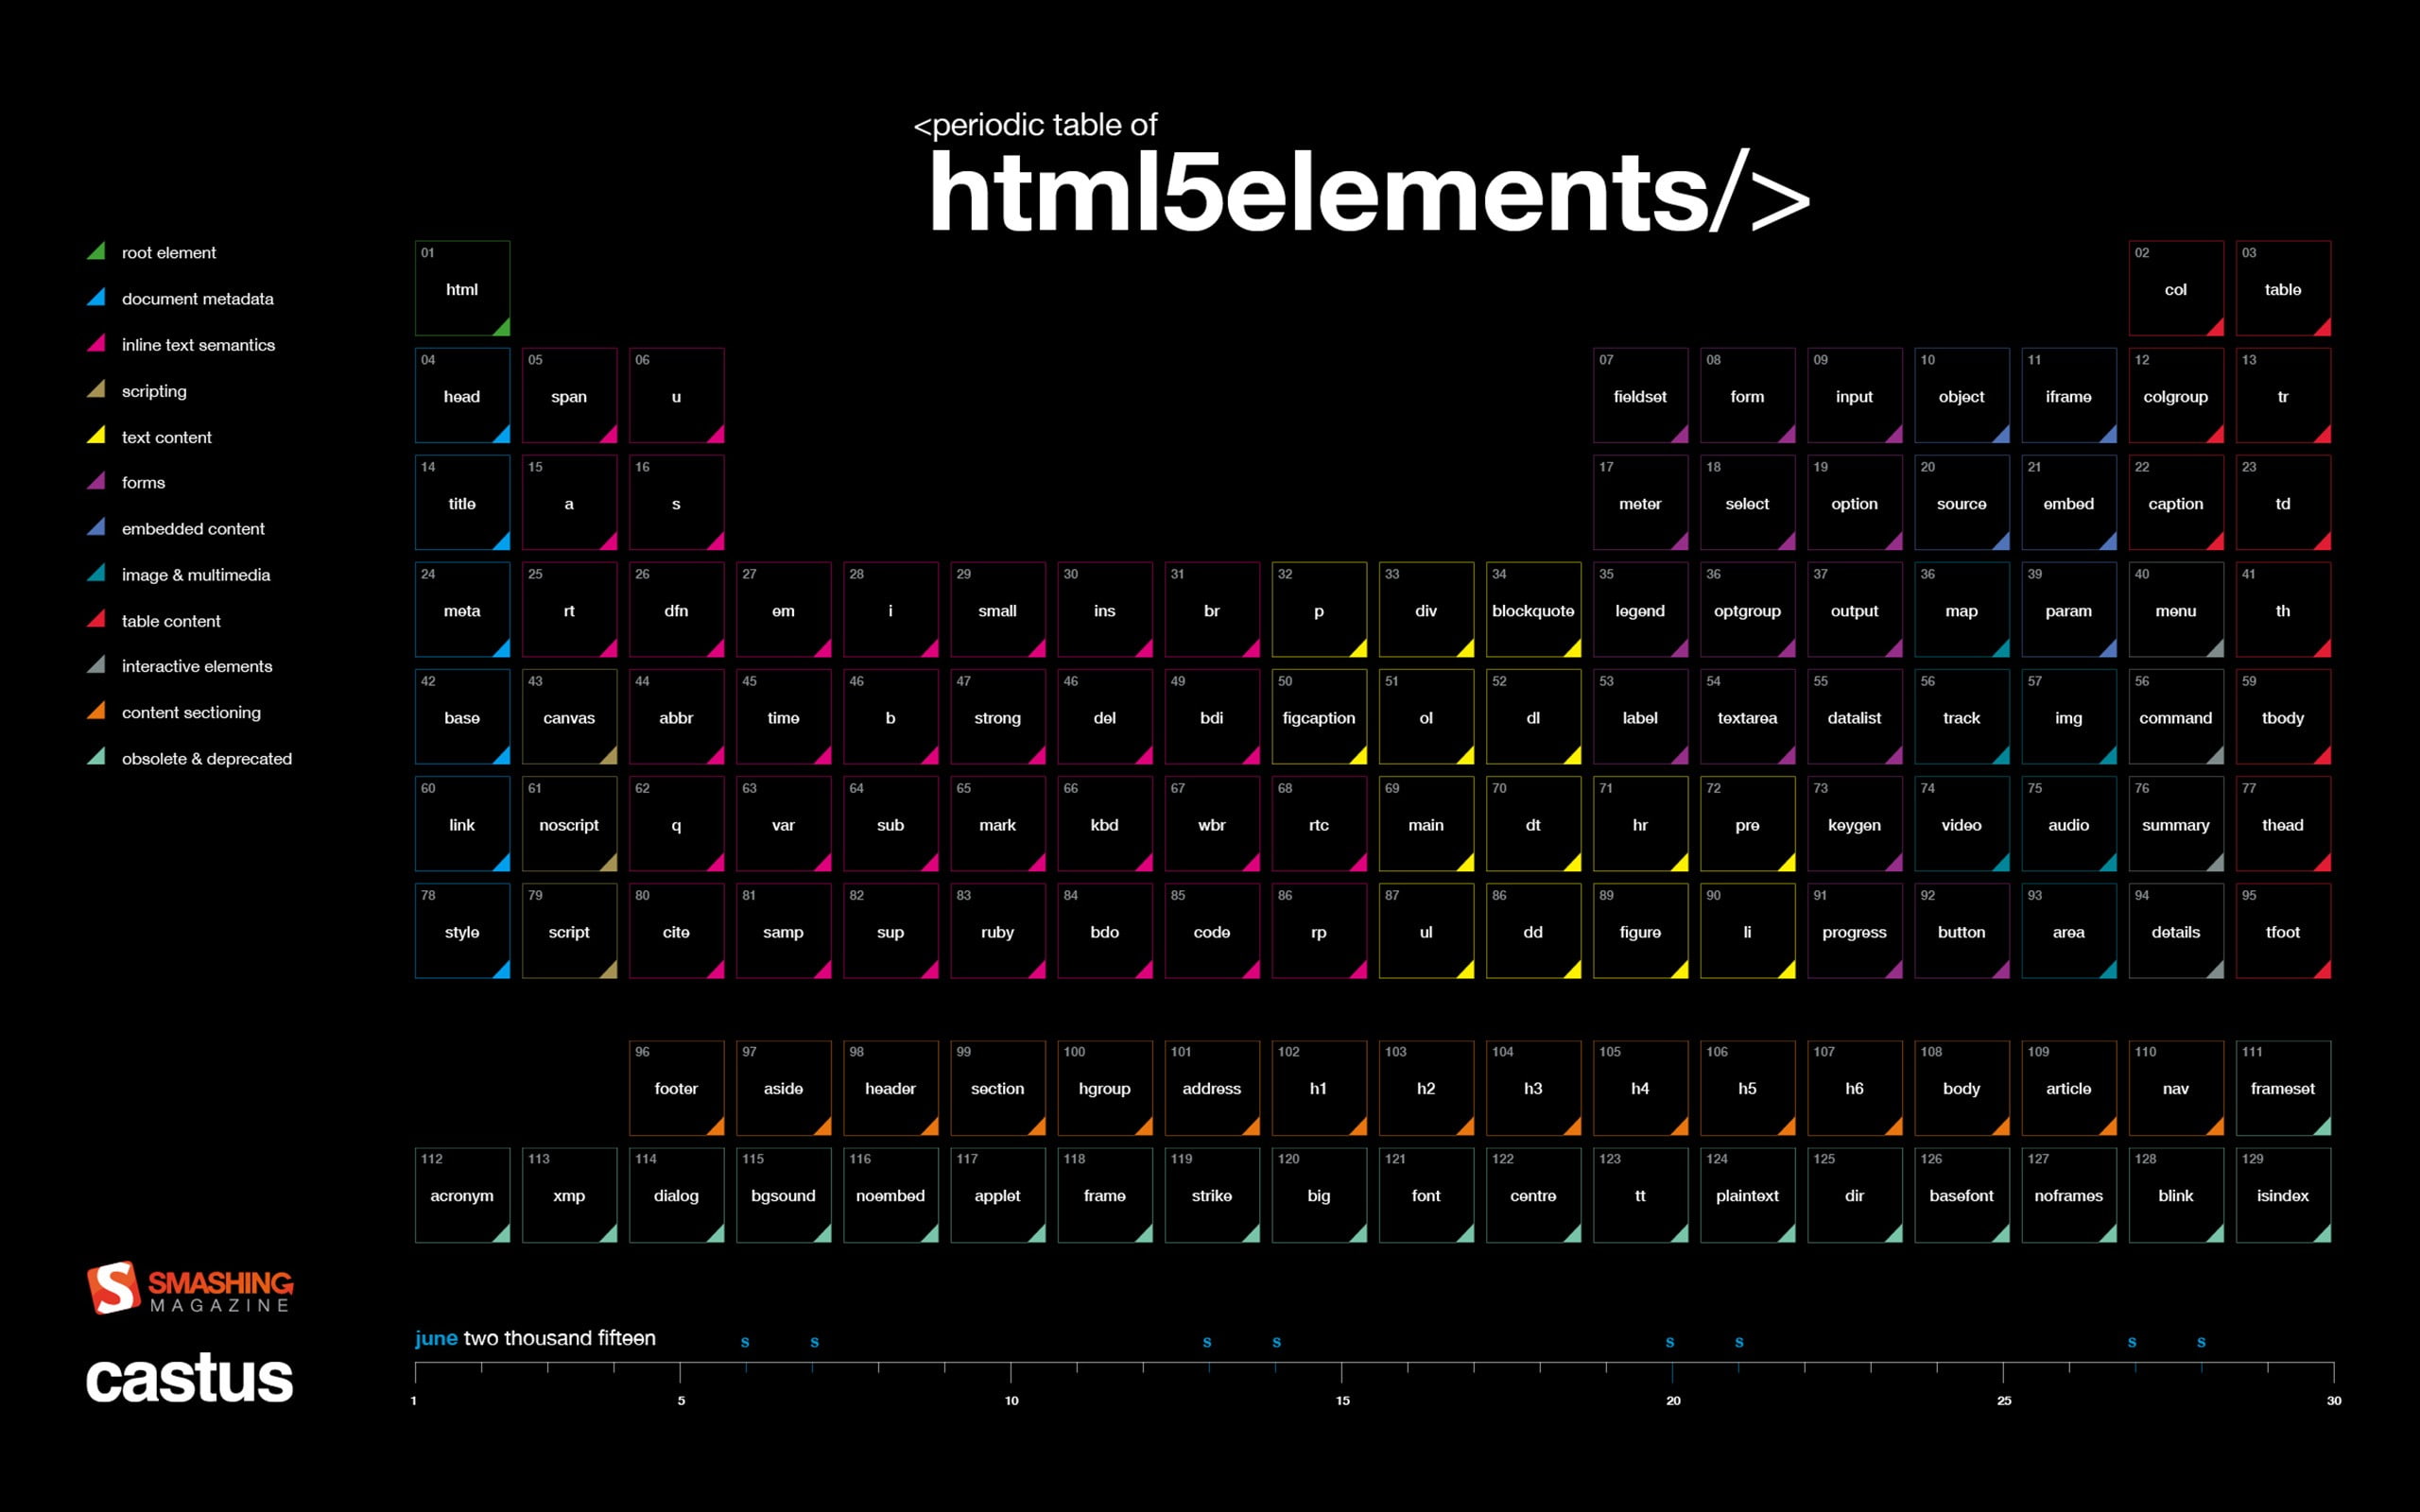 Periodic Table Of HTML5 Elements-June 2015 Calenda.., Castus html5elements